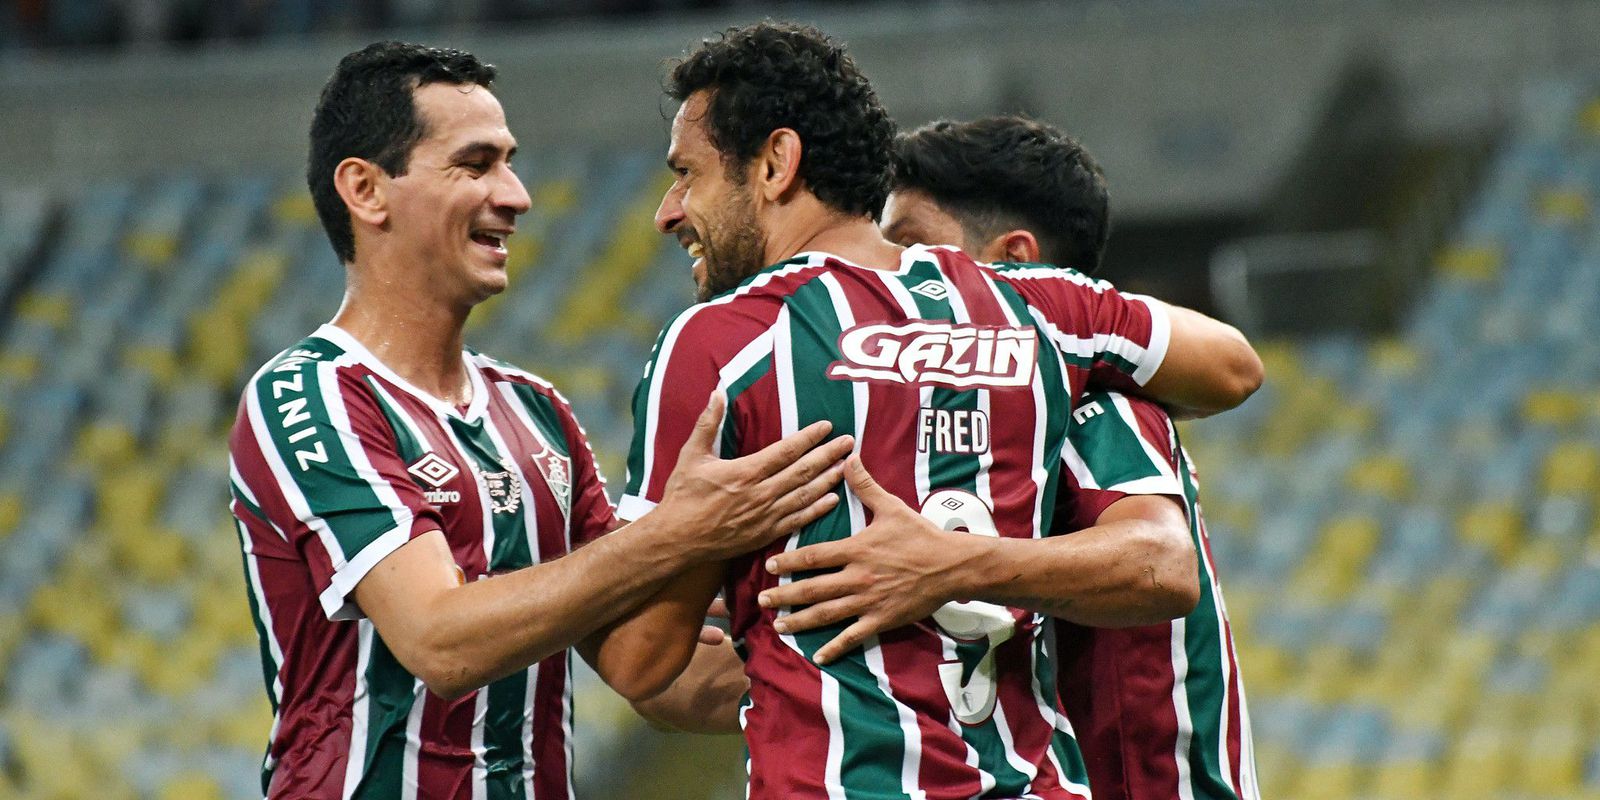 Fred guarantees Fluminense victory over Vila Nova in the Copa do Brasil